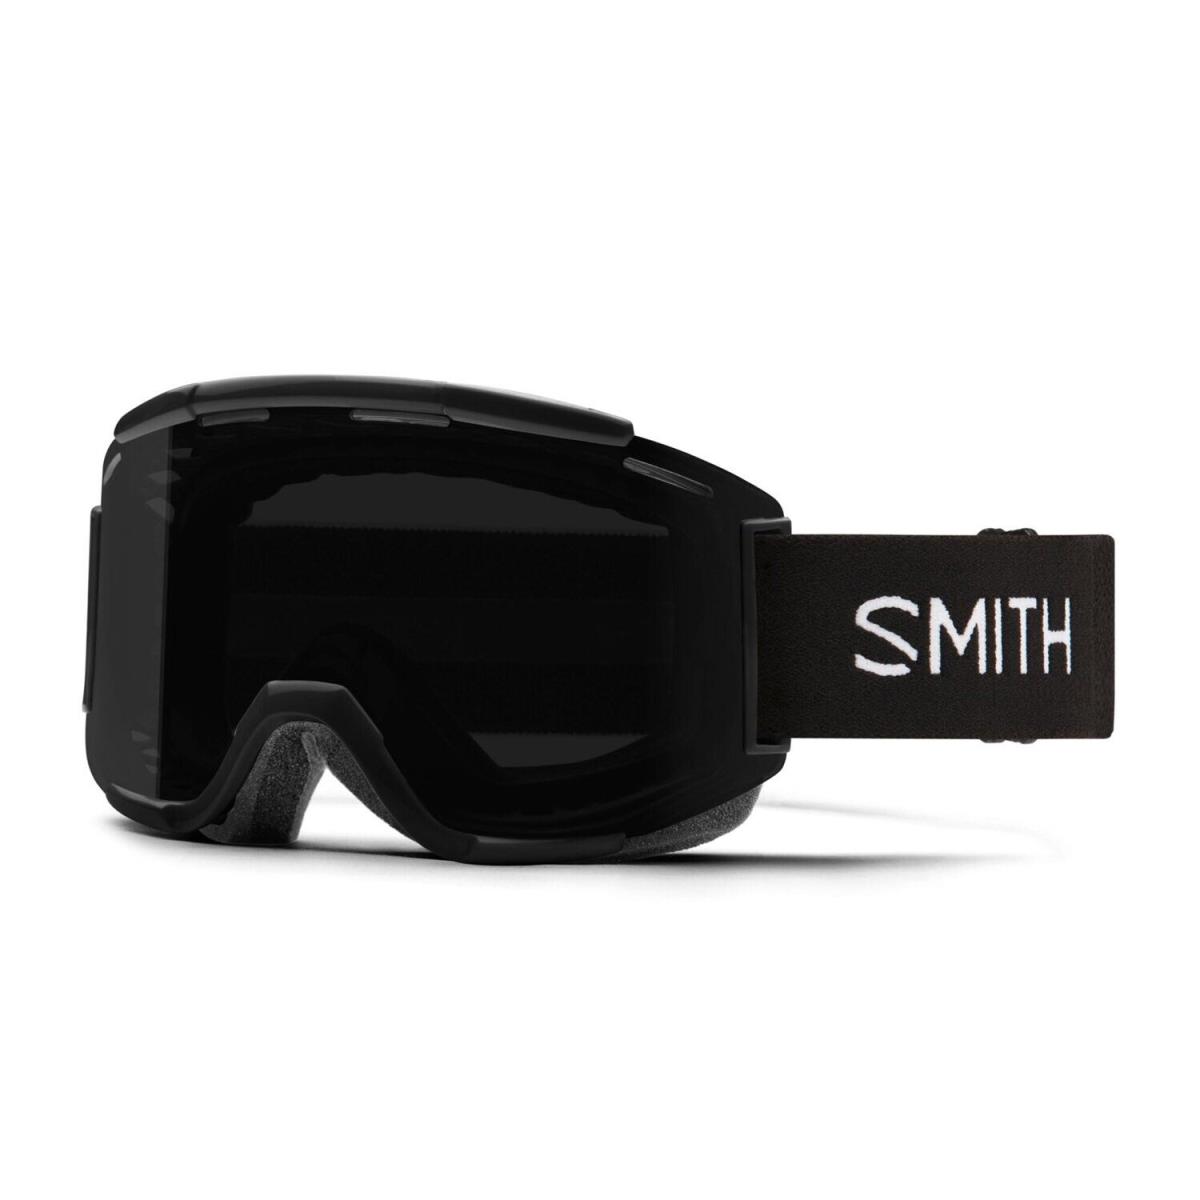 Smith Squad Mtb / Bike Goggles Black Frame Chromapop Sun Black + Bonus Lens